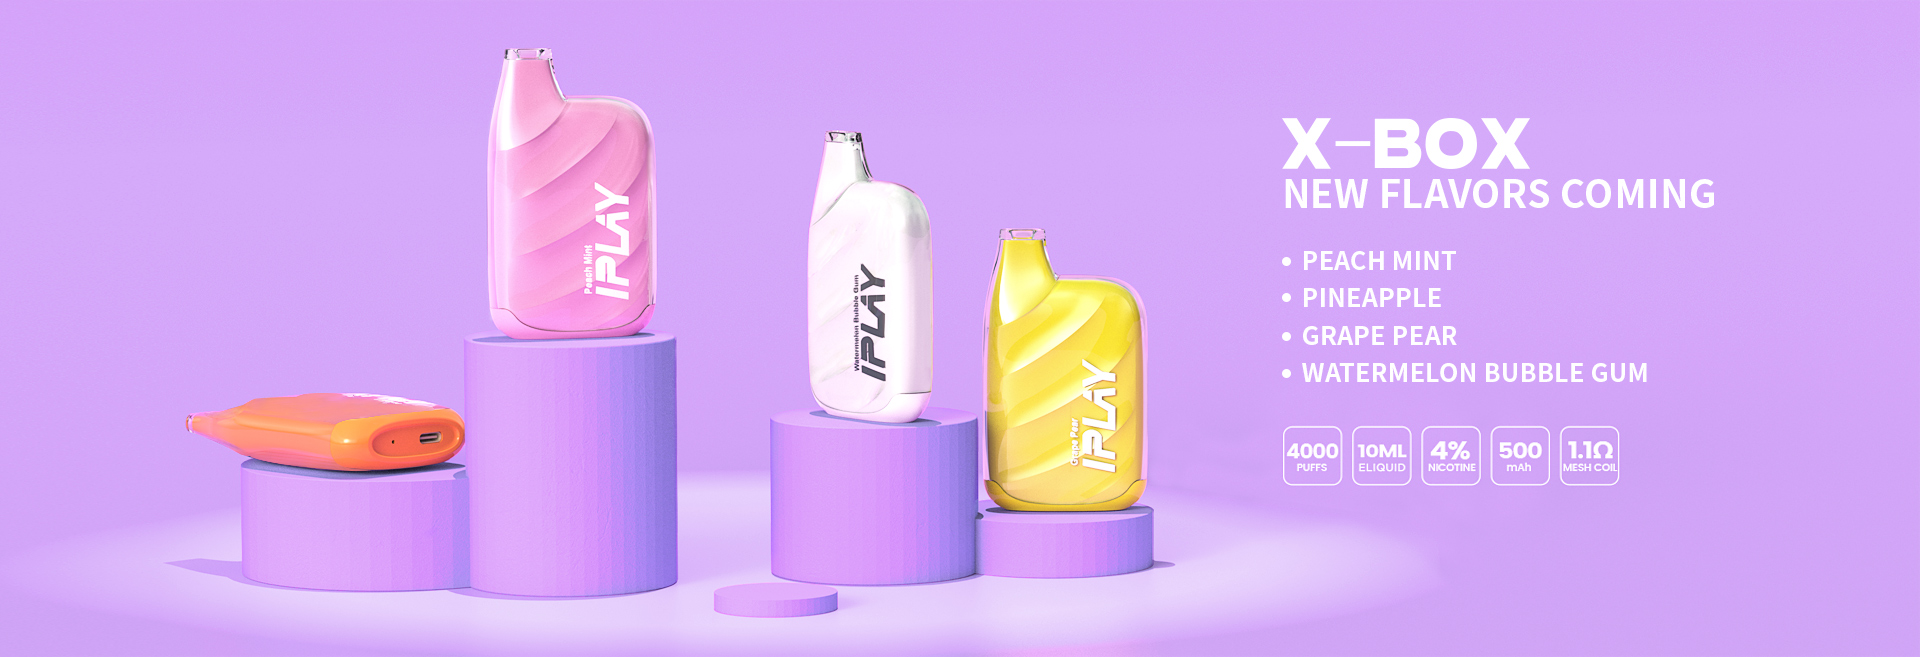 IPLAY X-BOX 일회용품 - 새로운 맛 출시 예정